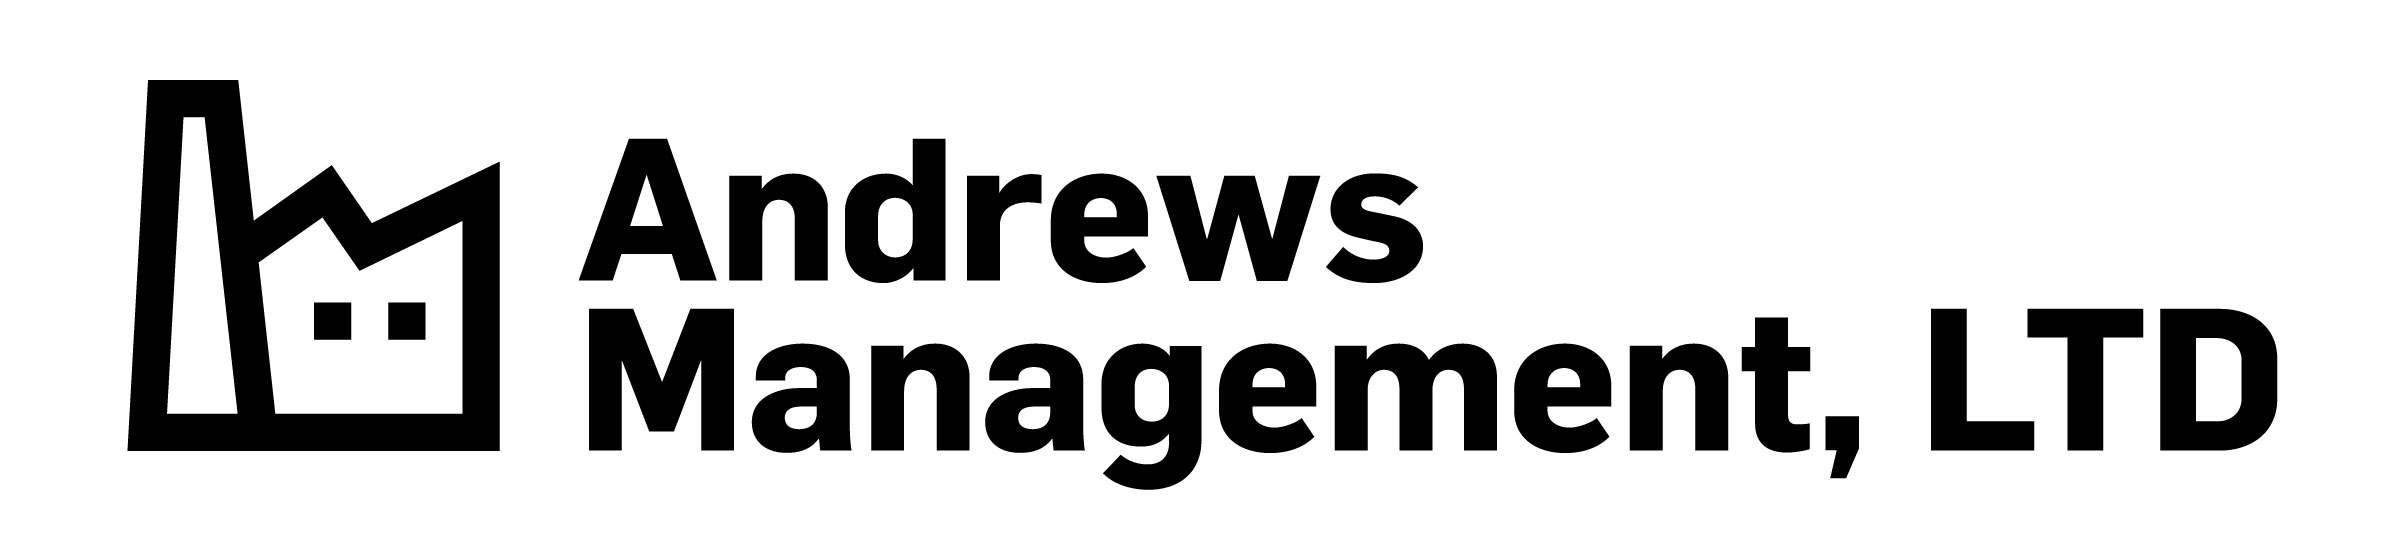 Andrews Management